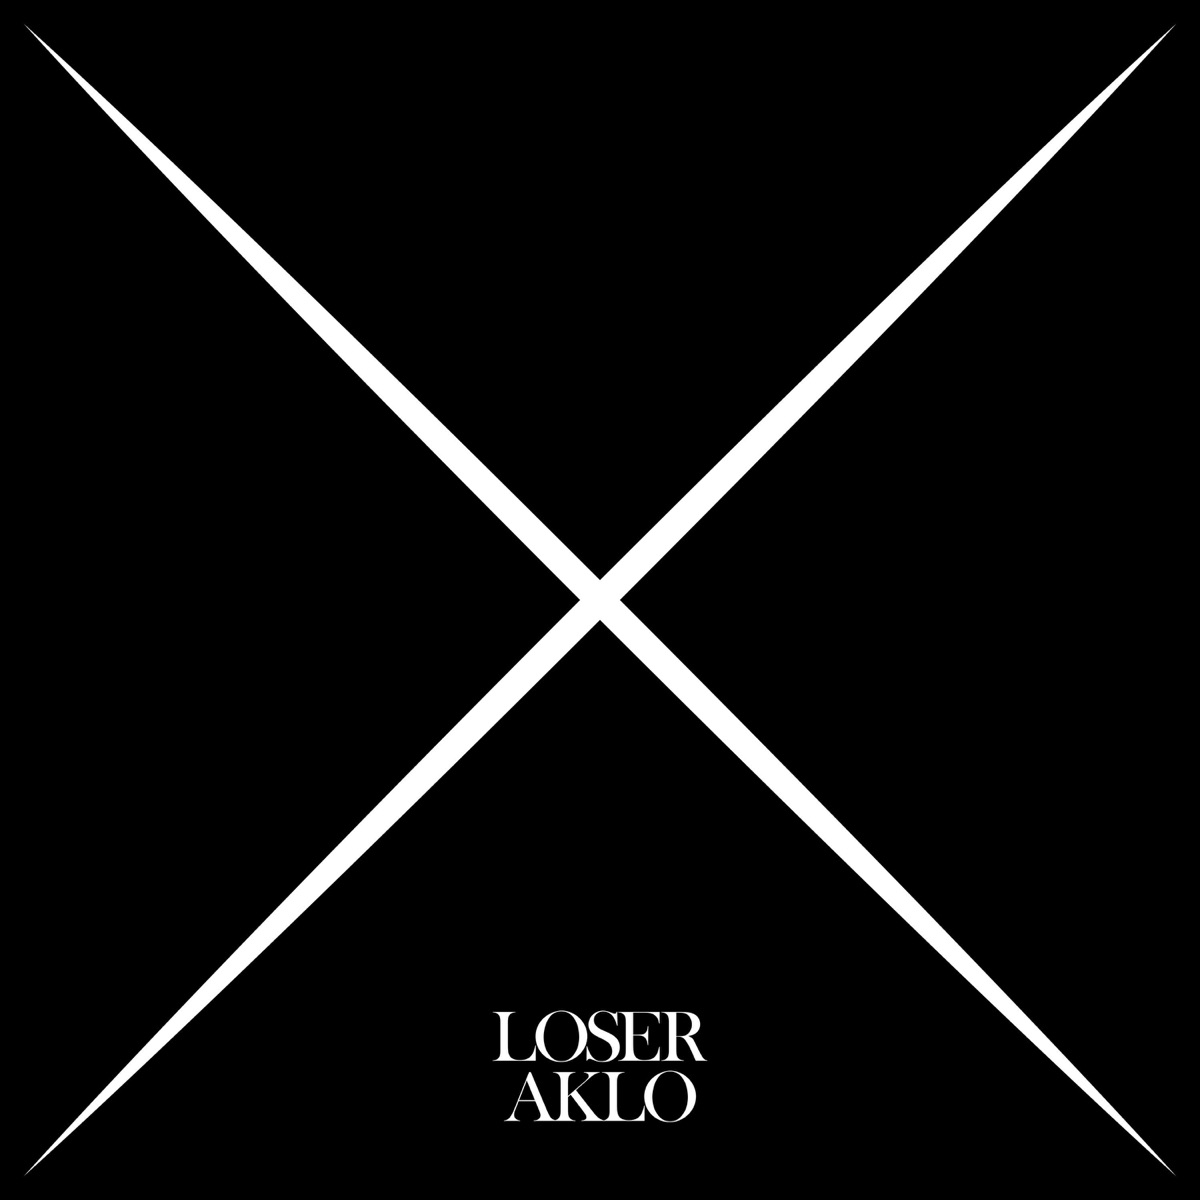 『AKLO - LOSER』収録の『LOSER』ジャケット